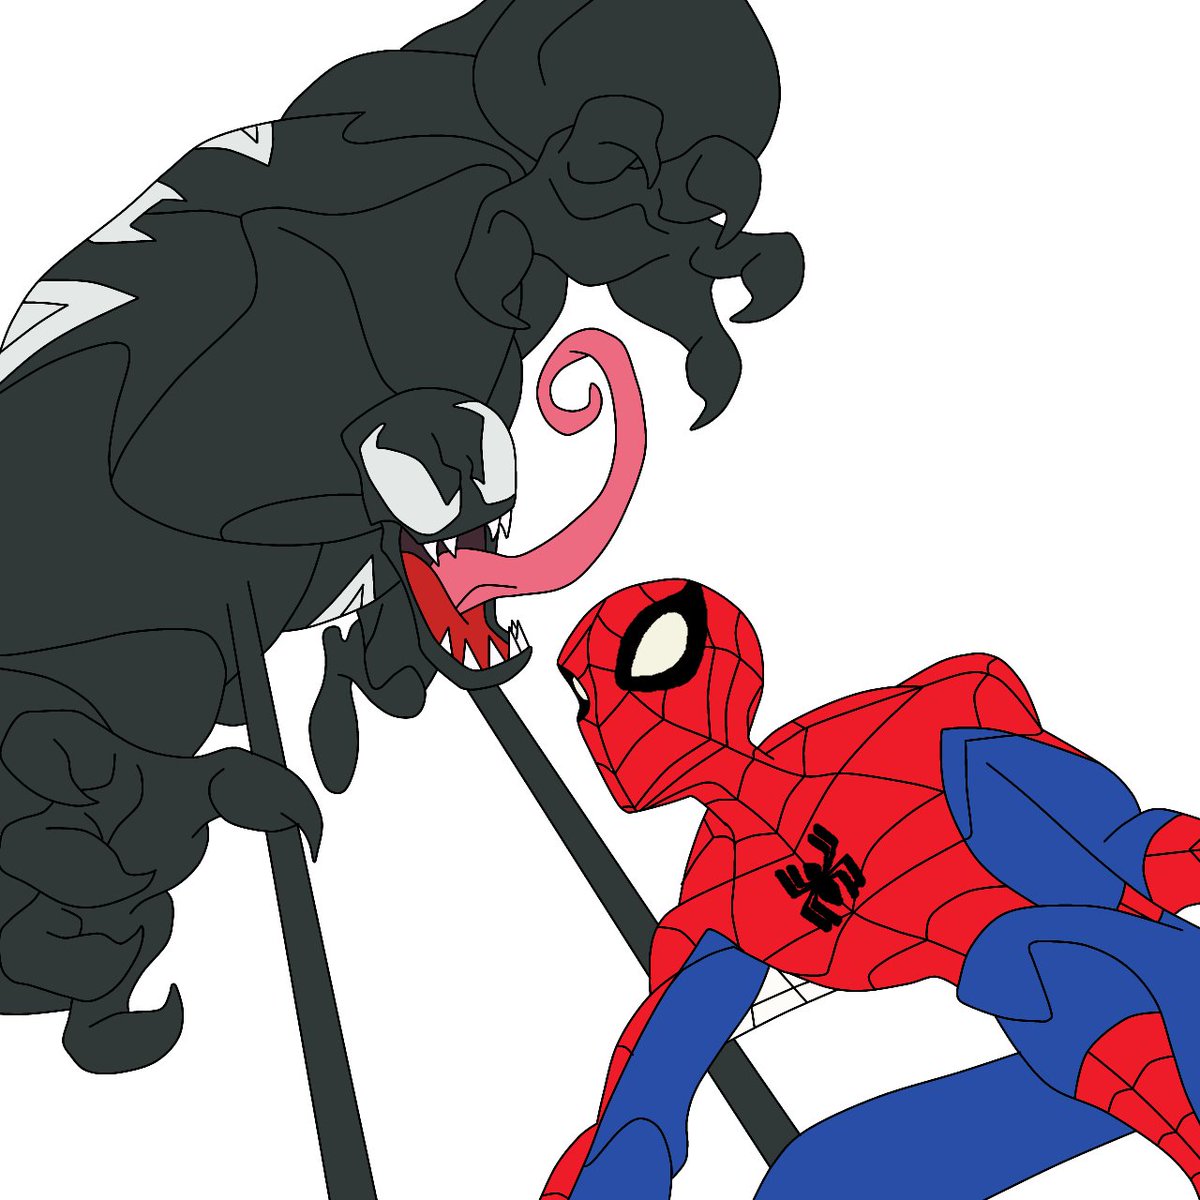 Spectacular Spider-Man vs. Venom

#SpecSpidey #SpectacularSpiderMan #SpecSpideyReturns #SpectacularVenom #Venom #PeterParker #EddieBrock #SymbioteSpiderMan #VenomSymbiote